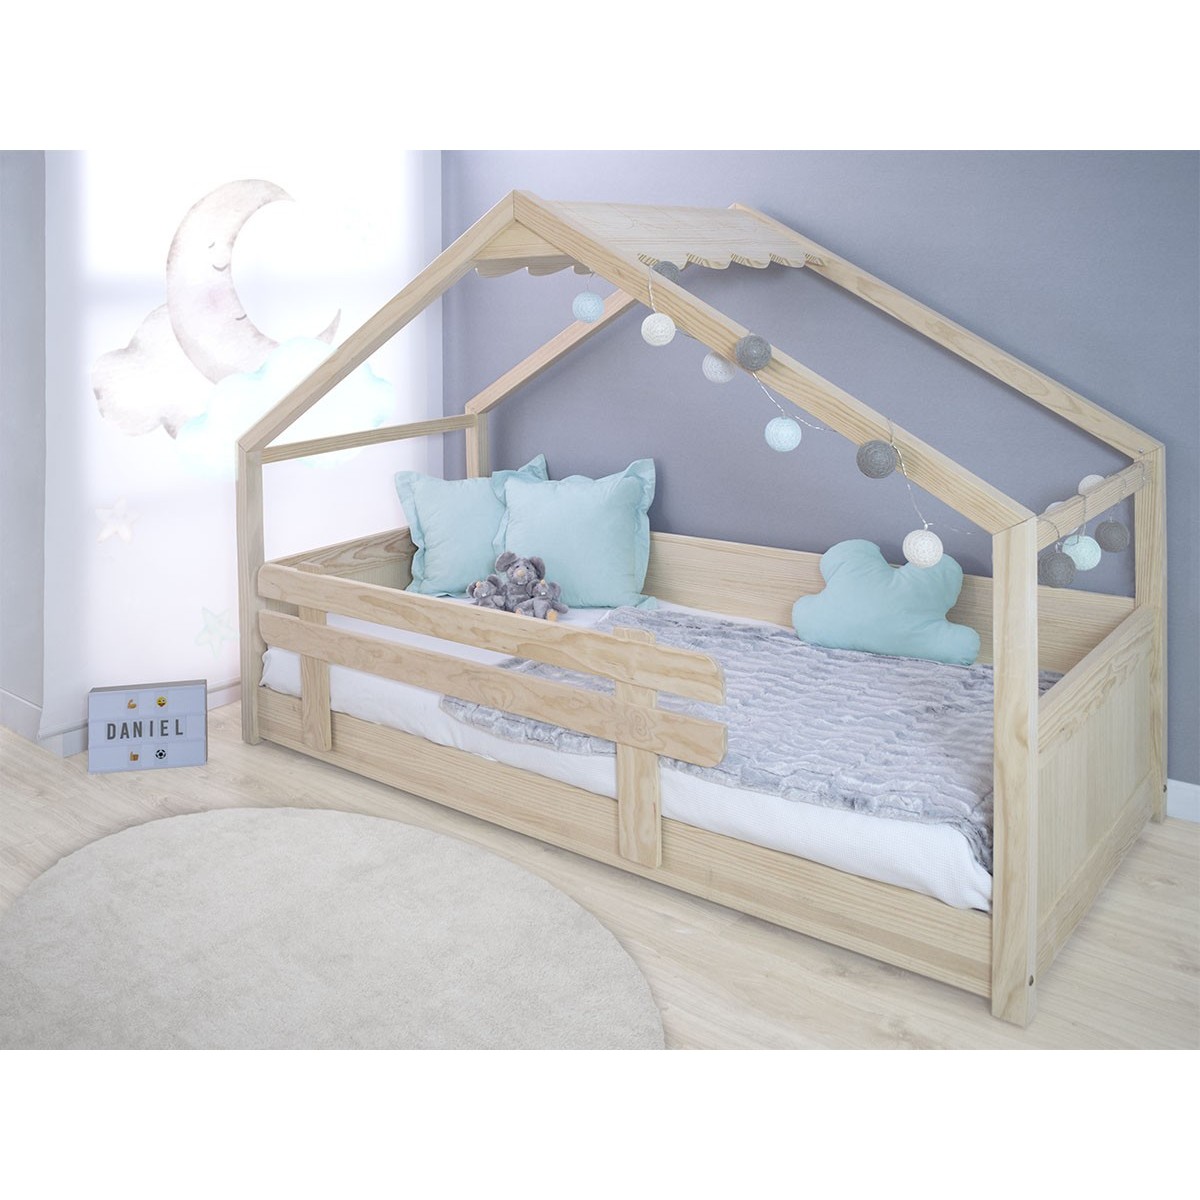 Cama infantil 90x190 Montessori con casita como techado